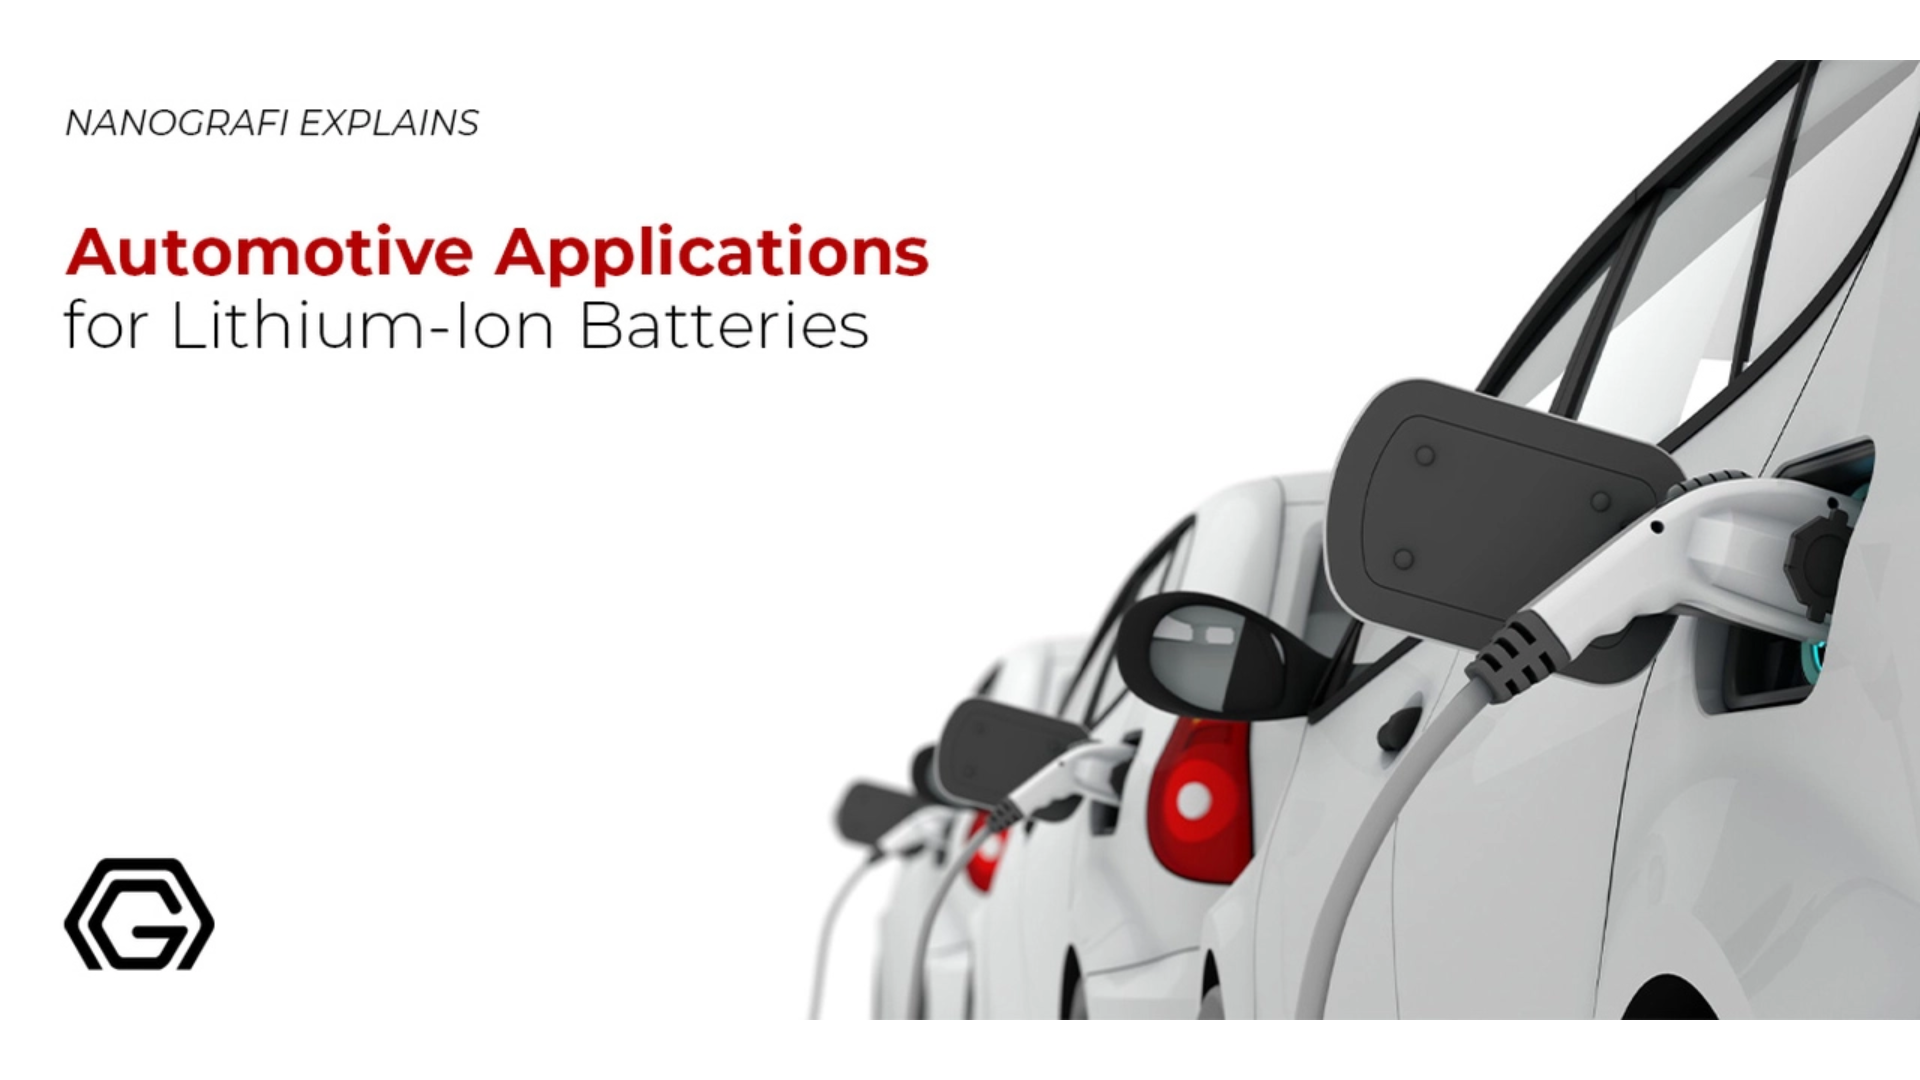 Automotive applications for Li-Ion batteries